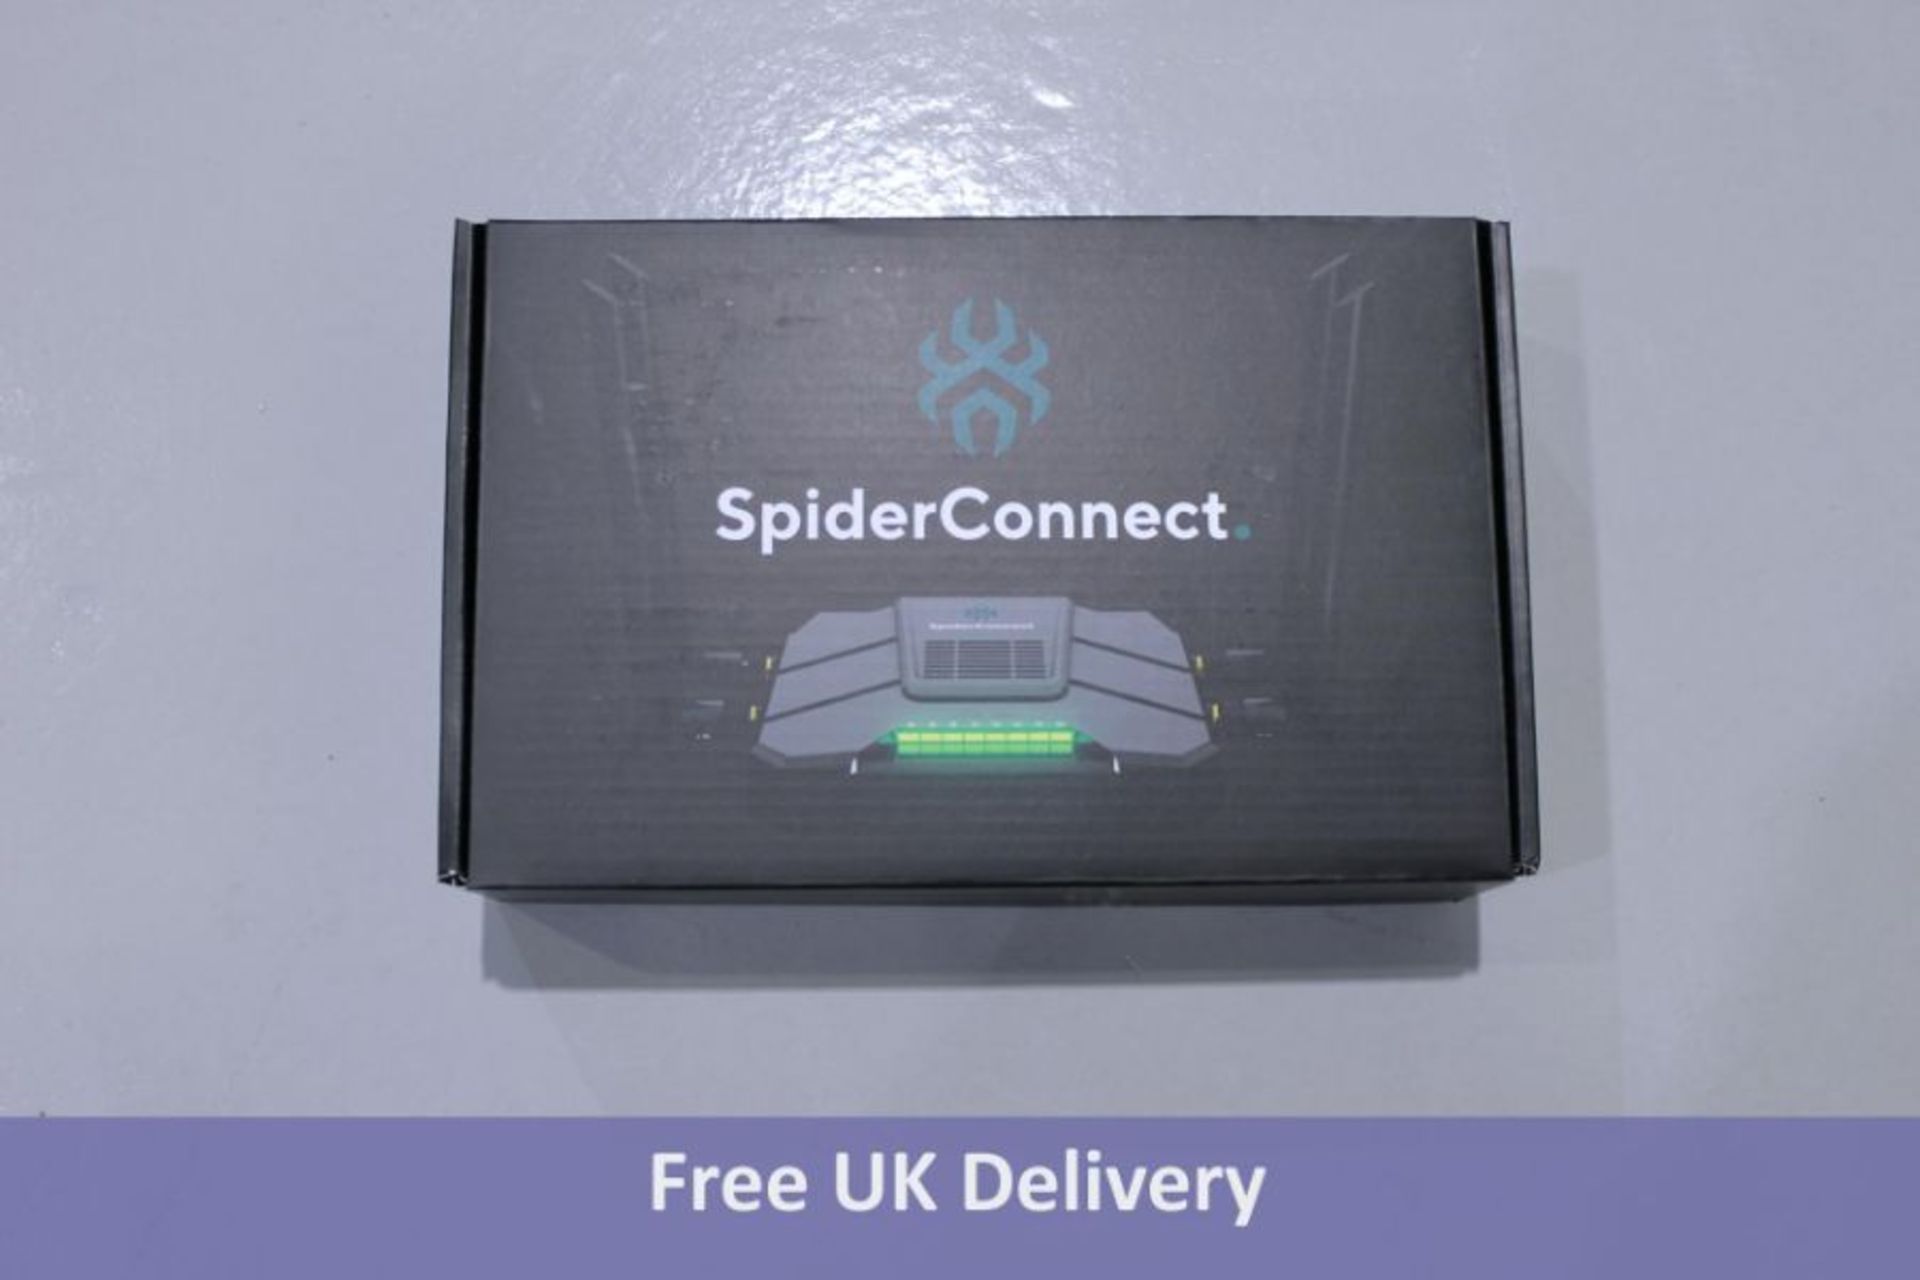 Twenty Spider Pro VPN Routers